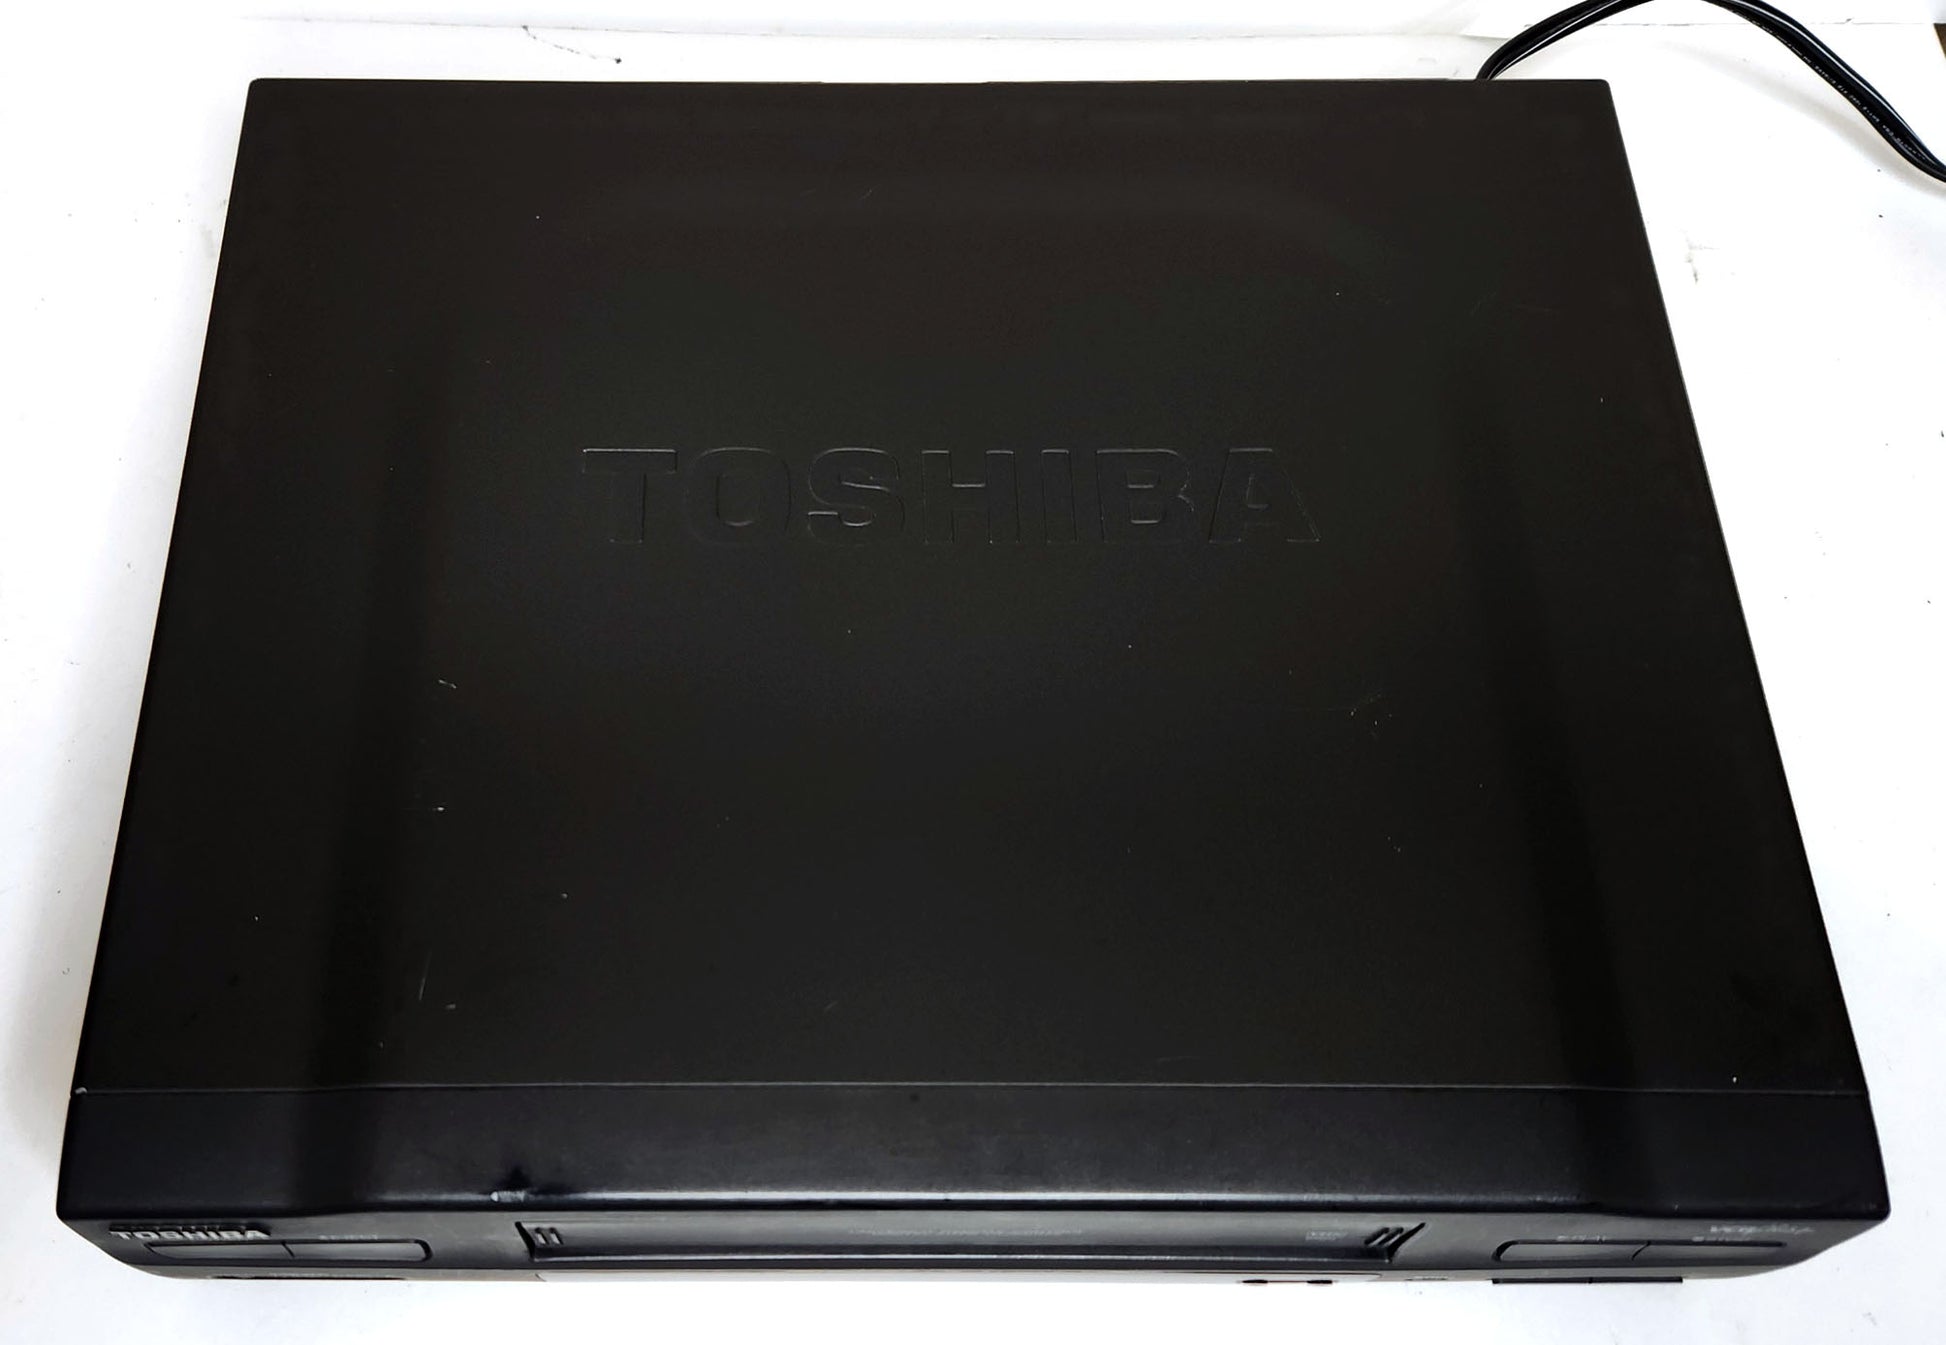 Toshiba M-65 VCR, 4-Head Hi-Fi Stereo - Top